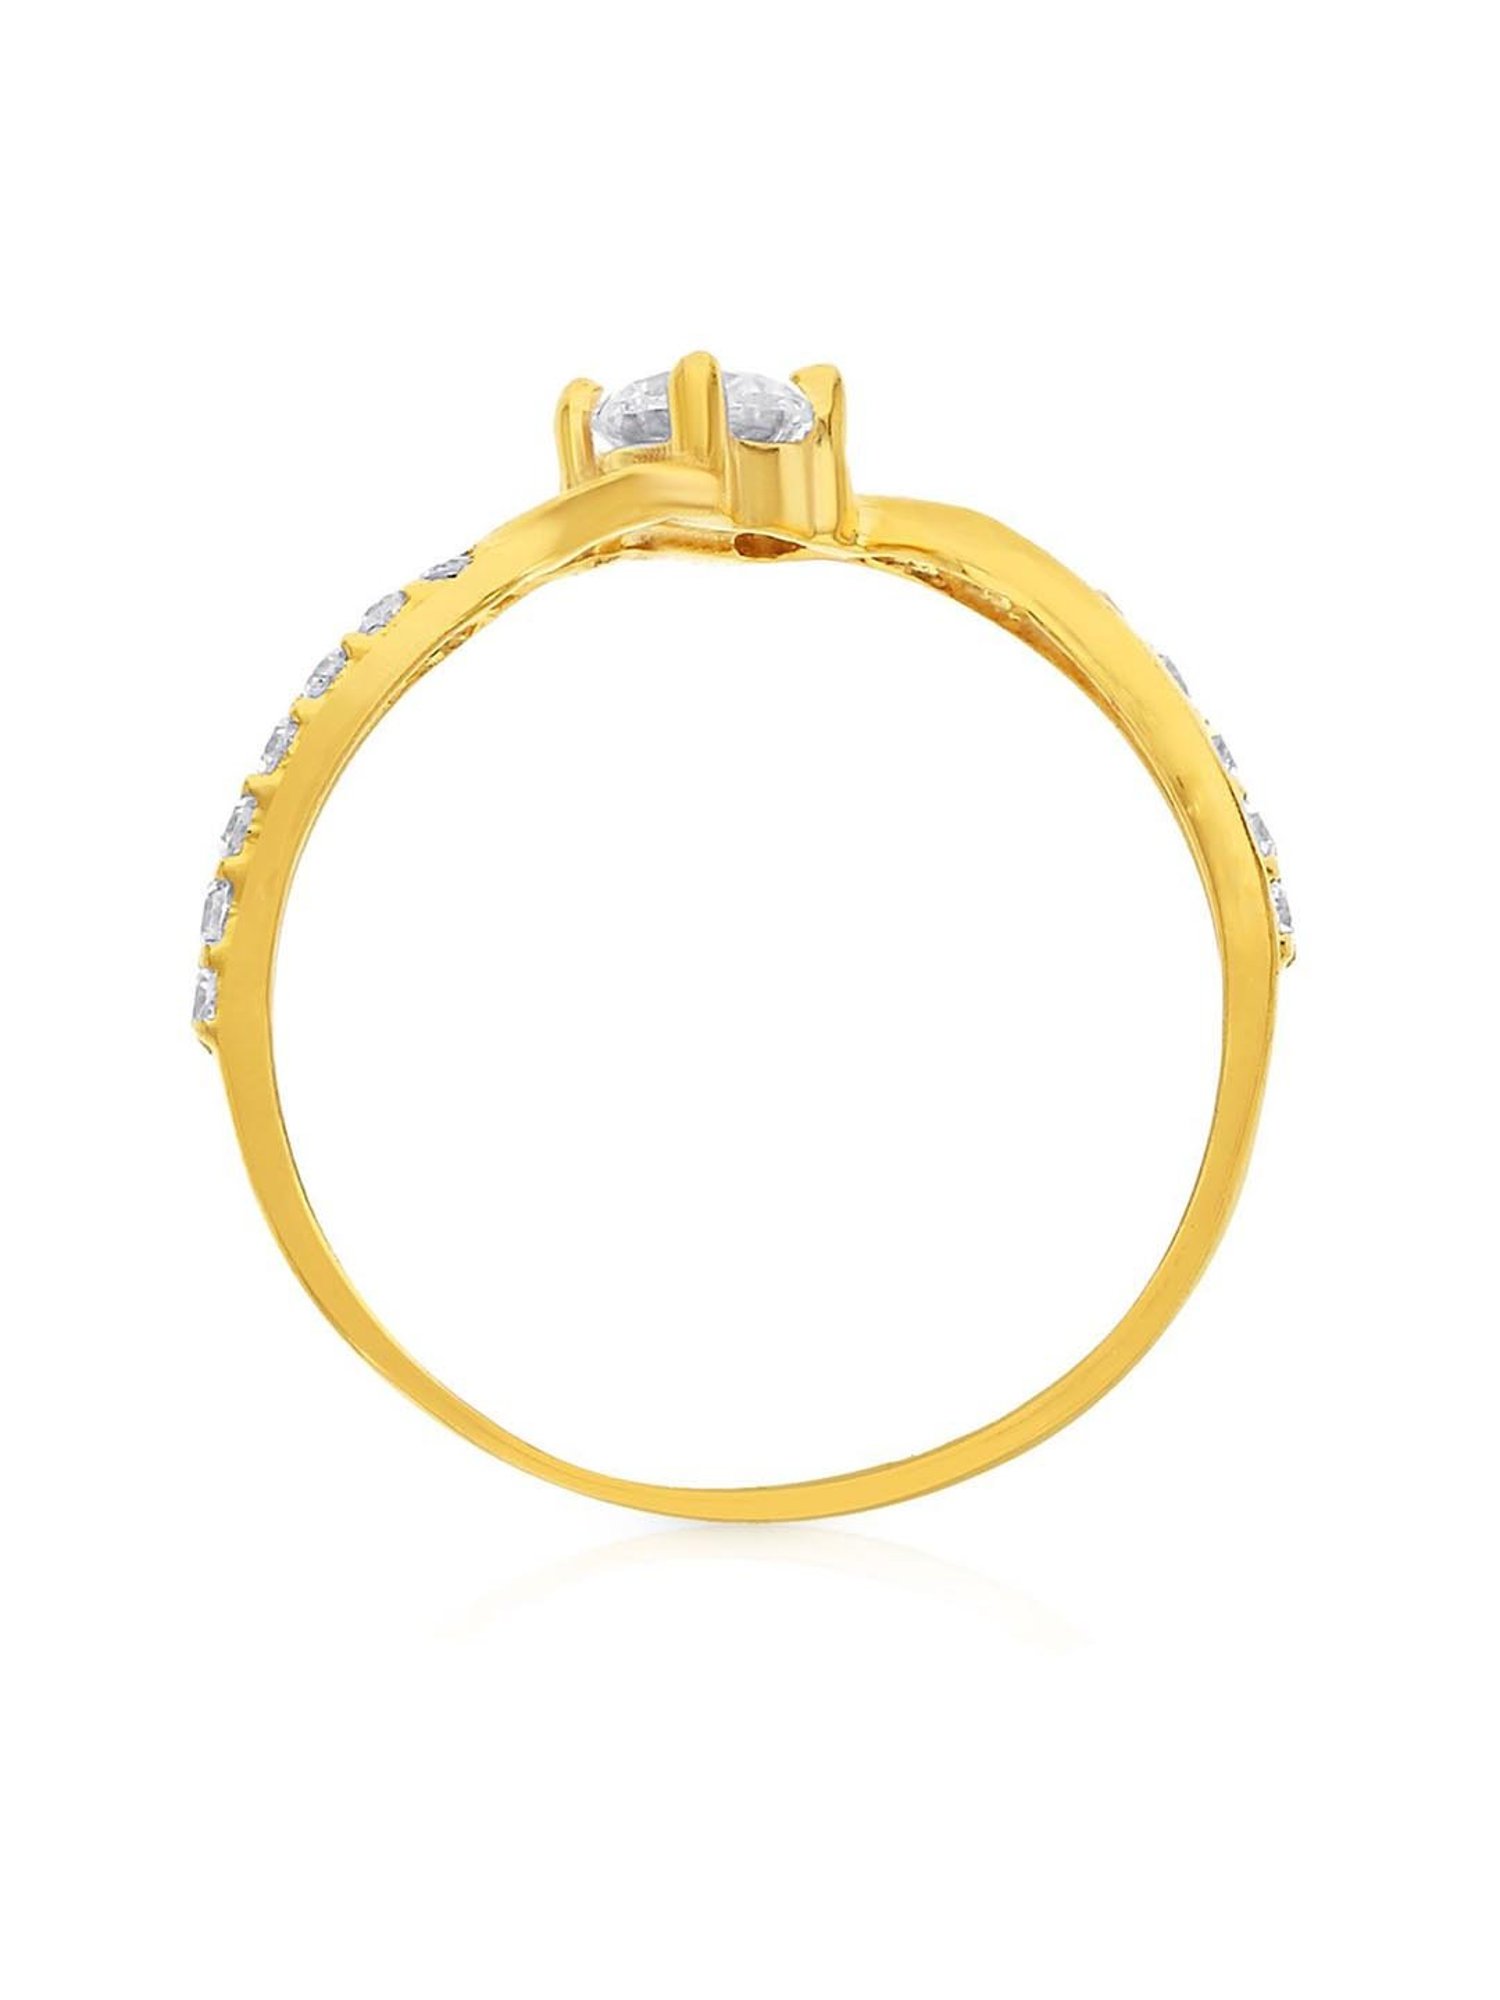 Rings Under 10,000 | PC Jeweller